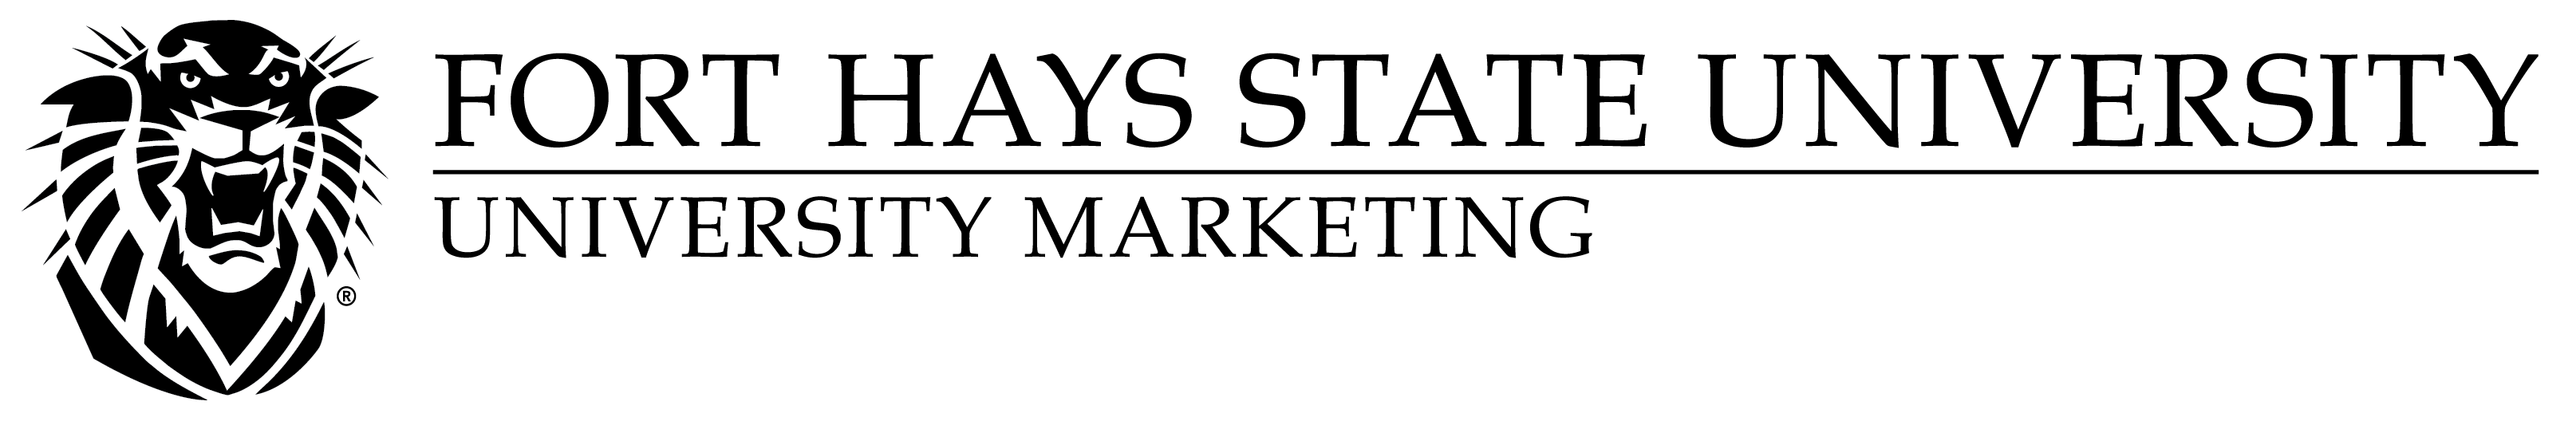 FHSU department logo - black - long